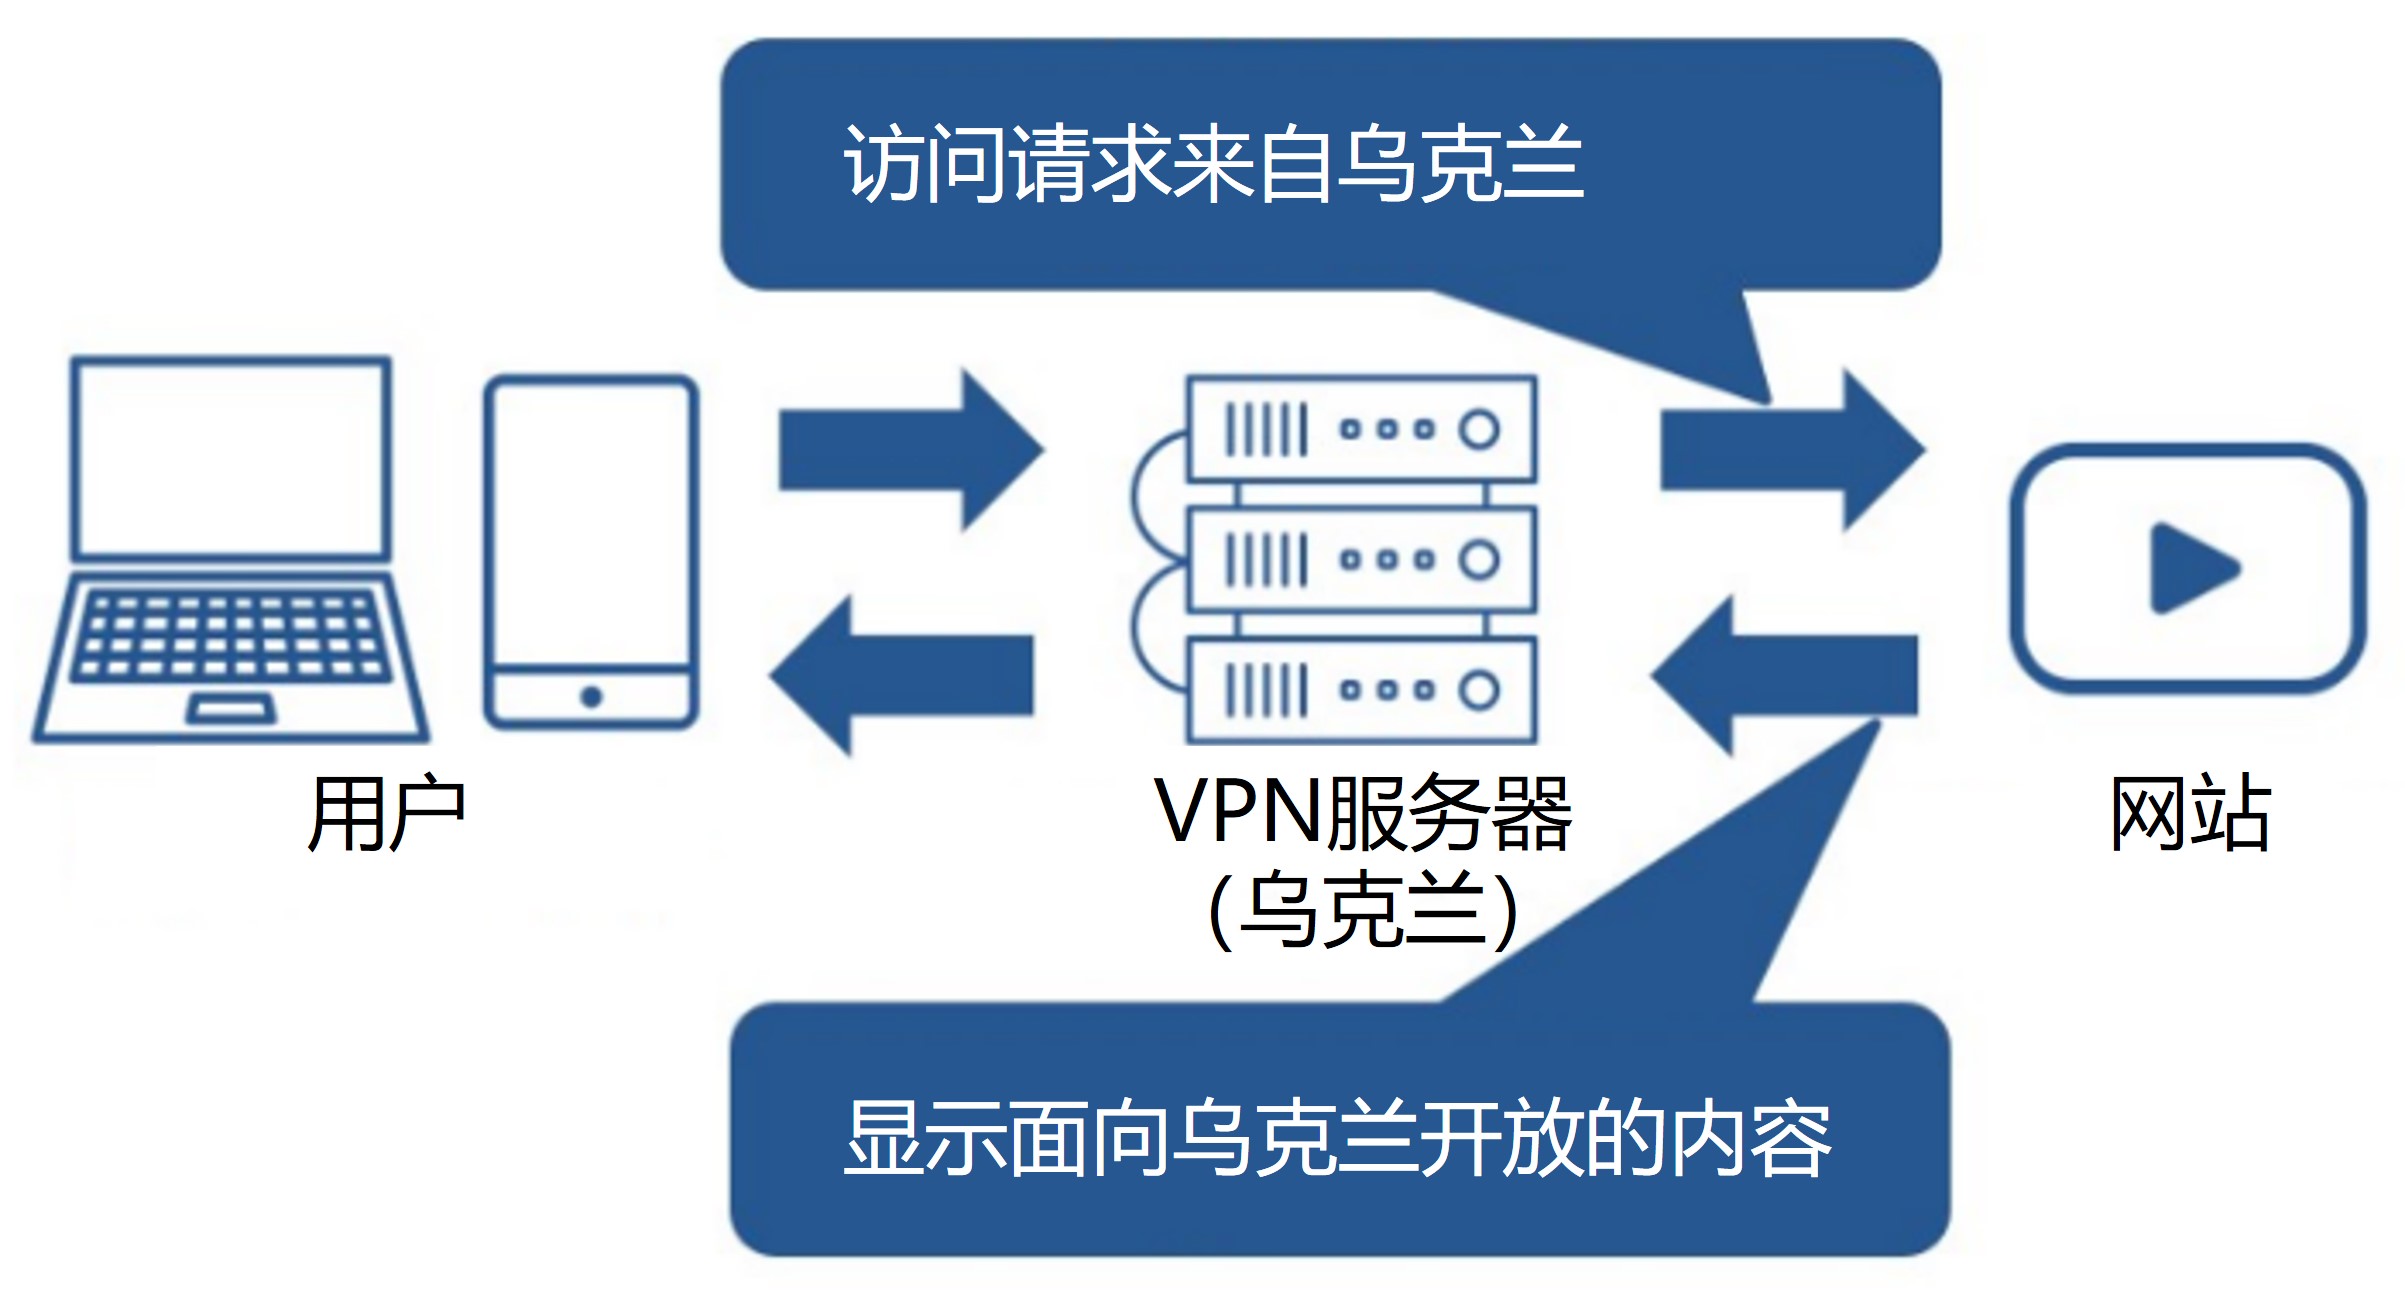 Connect to VPN Server in Ukraine